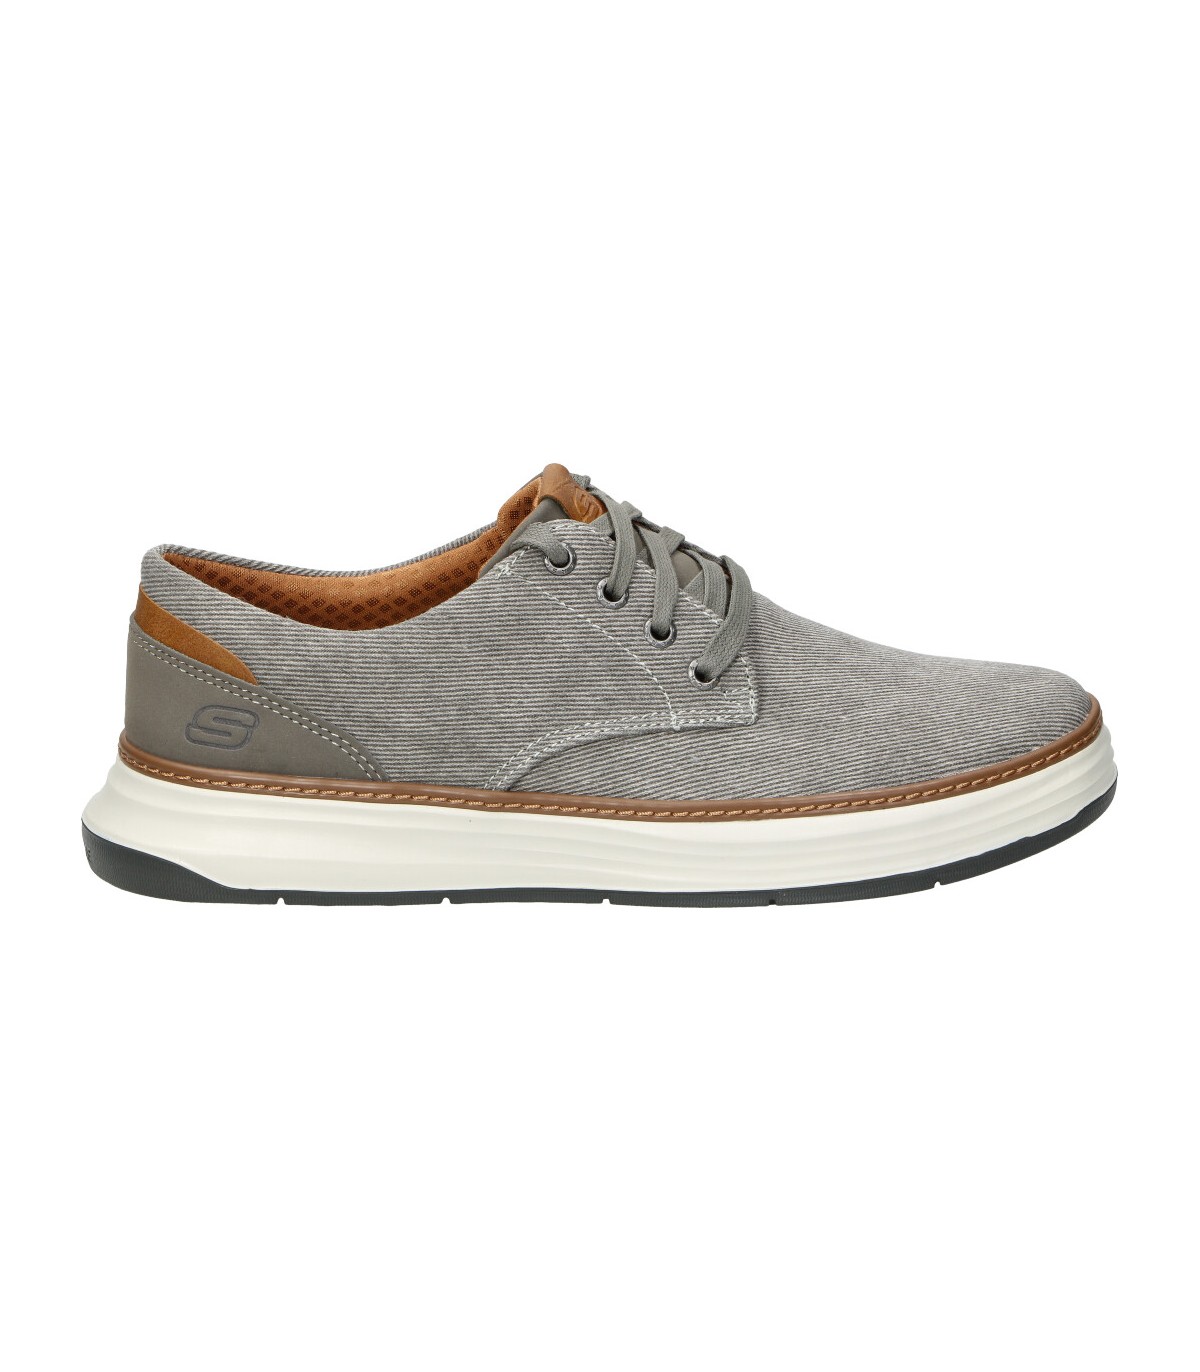 Zapatos para hombre SKECHERS 65981-tpe en gris